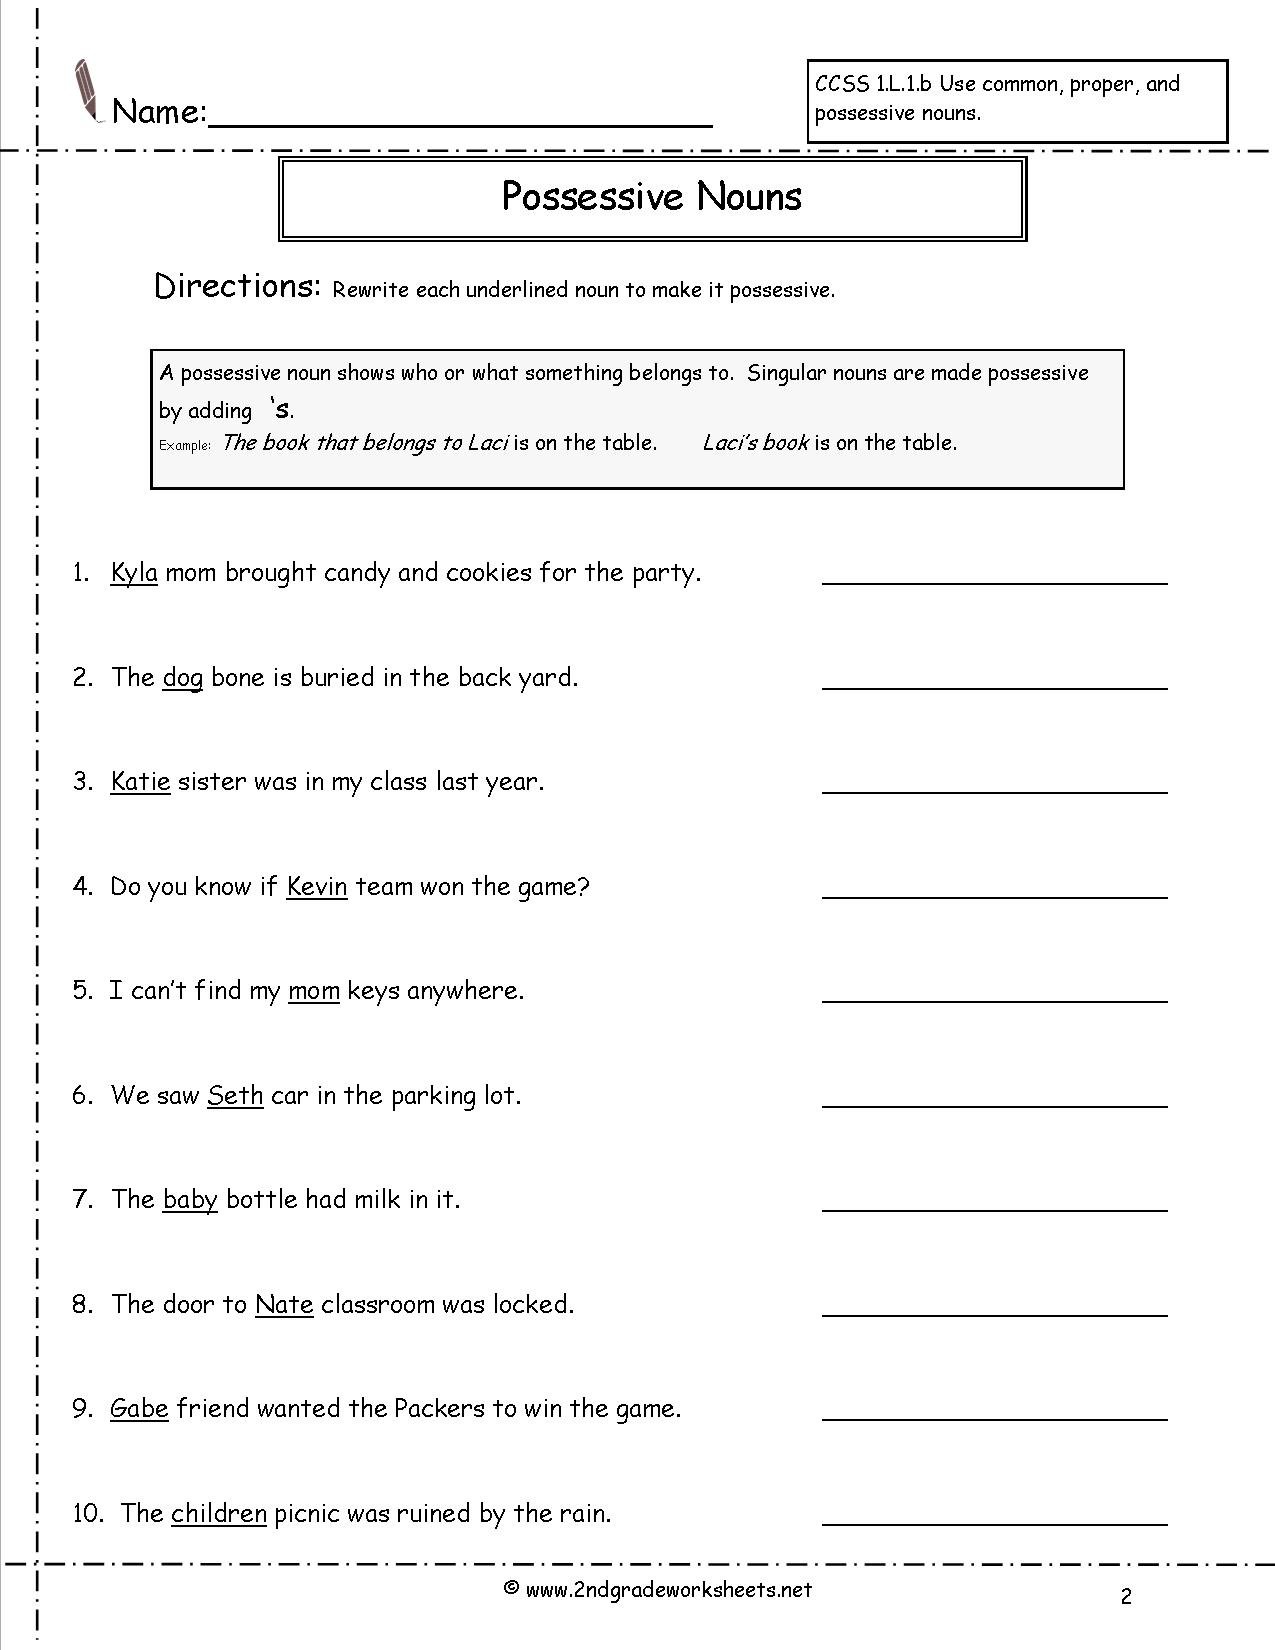 Free Possessive Pronoun Worksheets The Best Worksheets Image